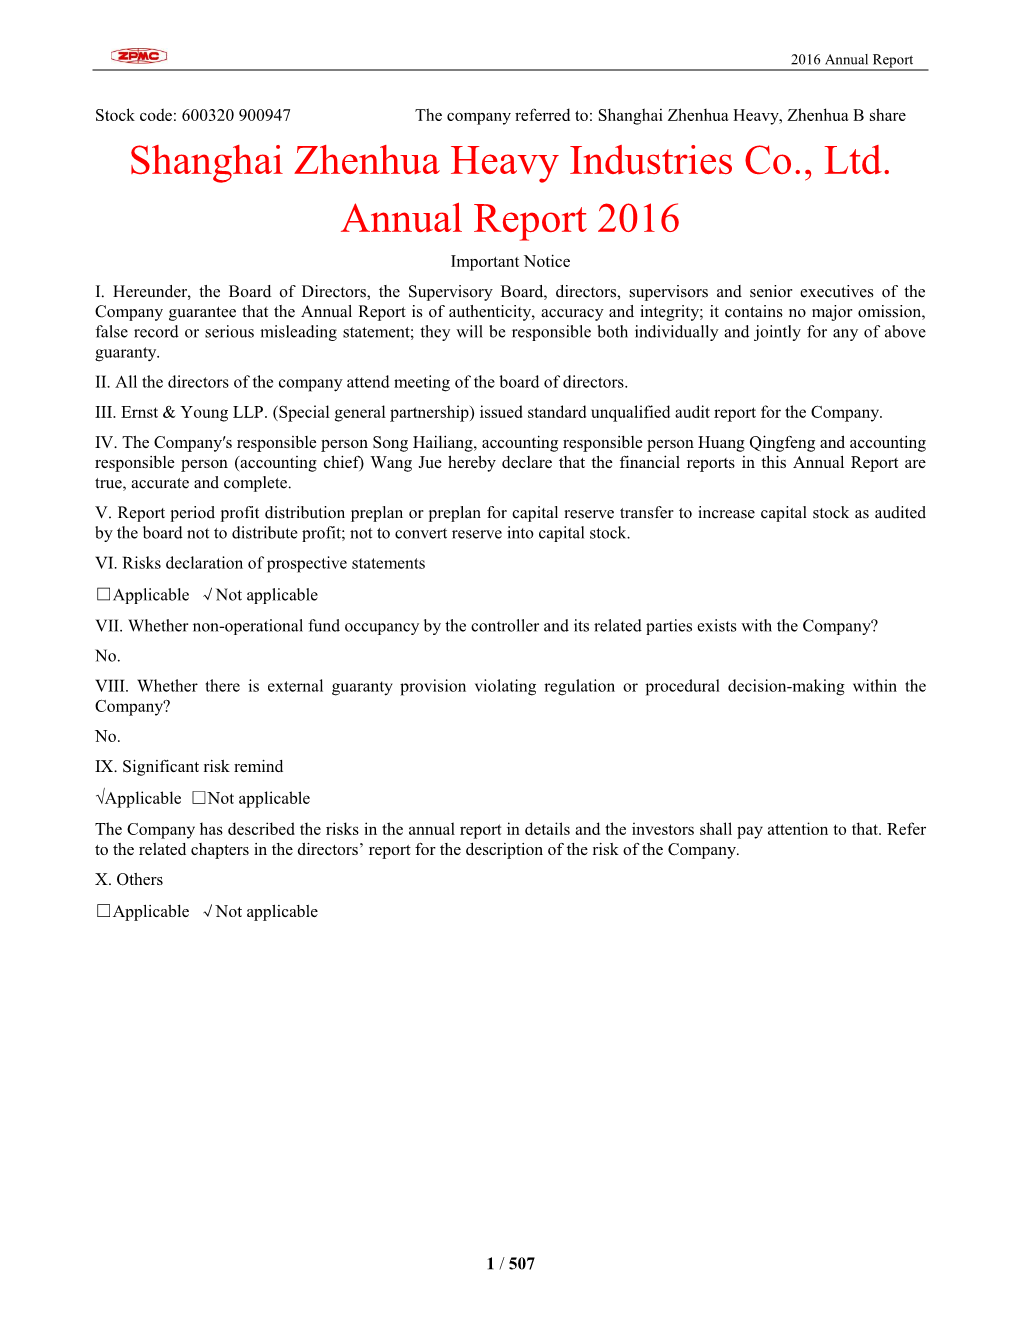 Shanghai Zhenhua Heavy Industries Co., Ltd. Annual Report 2016 Important Notice I